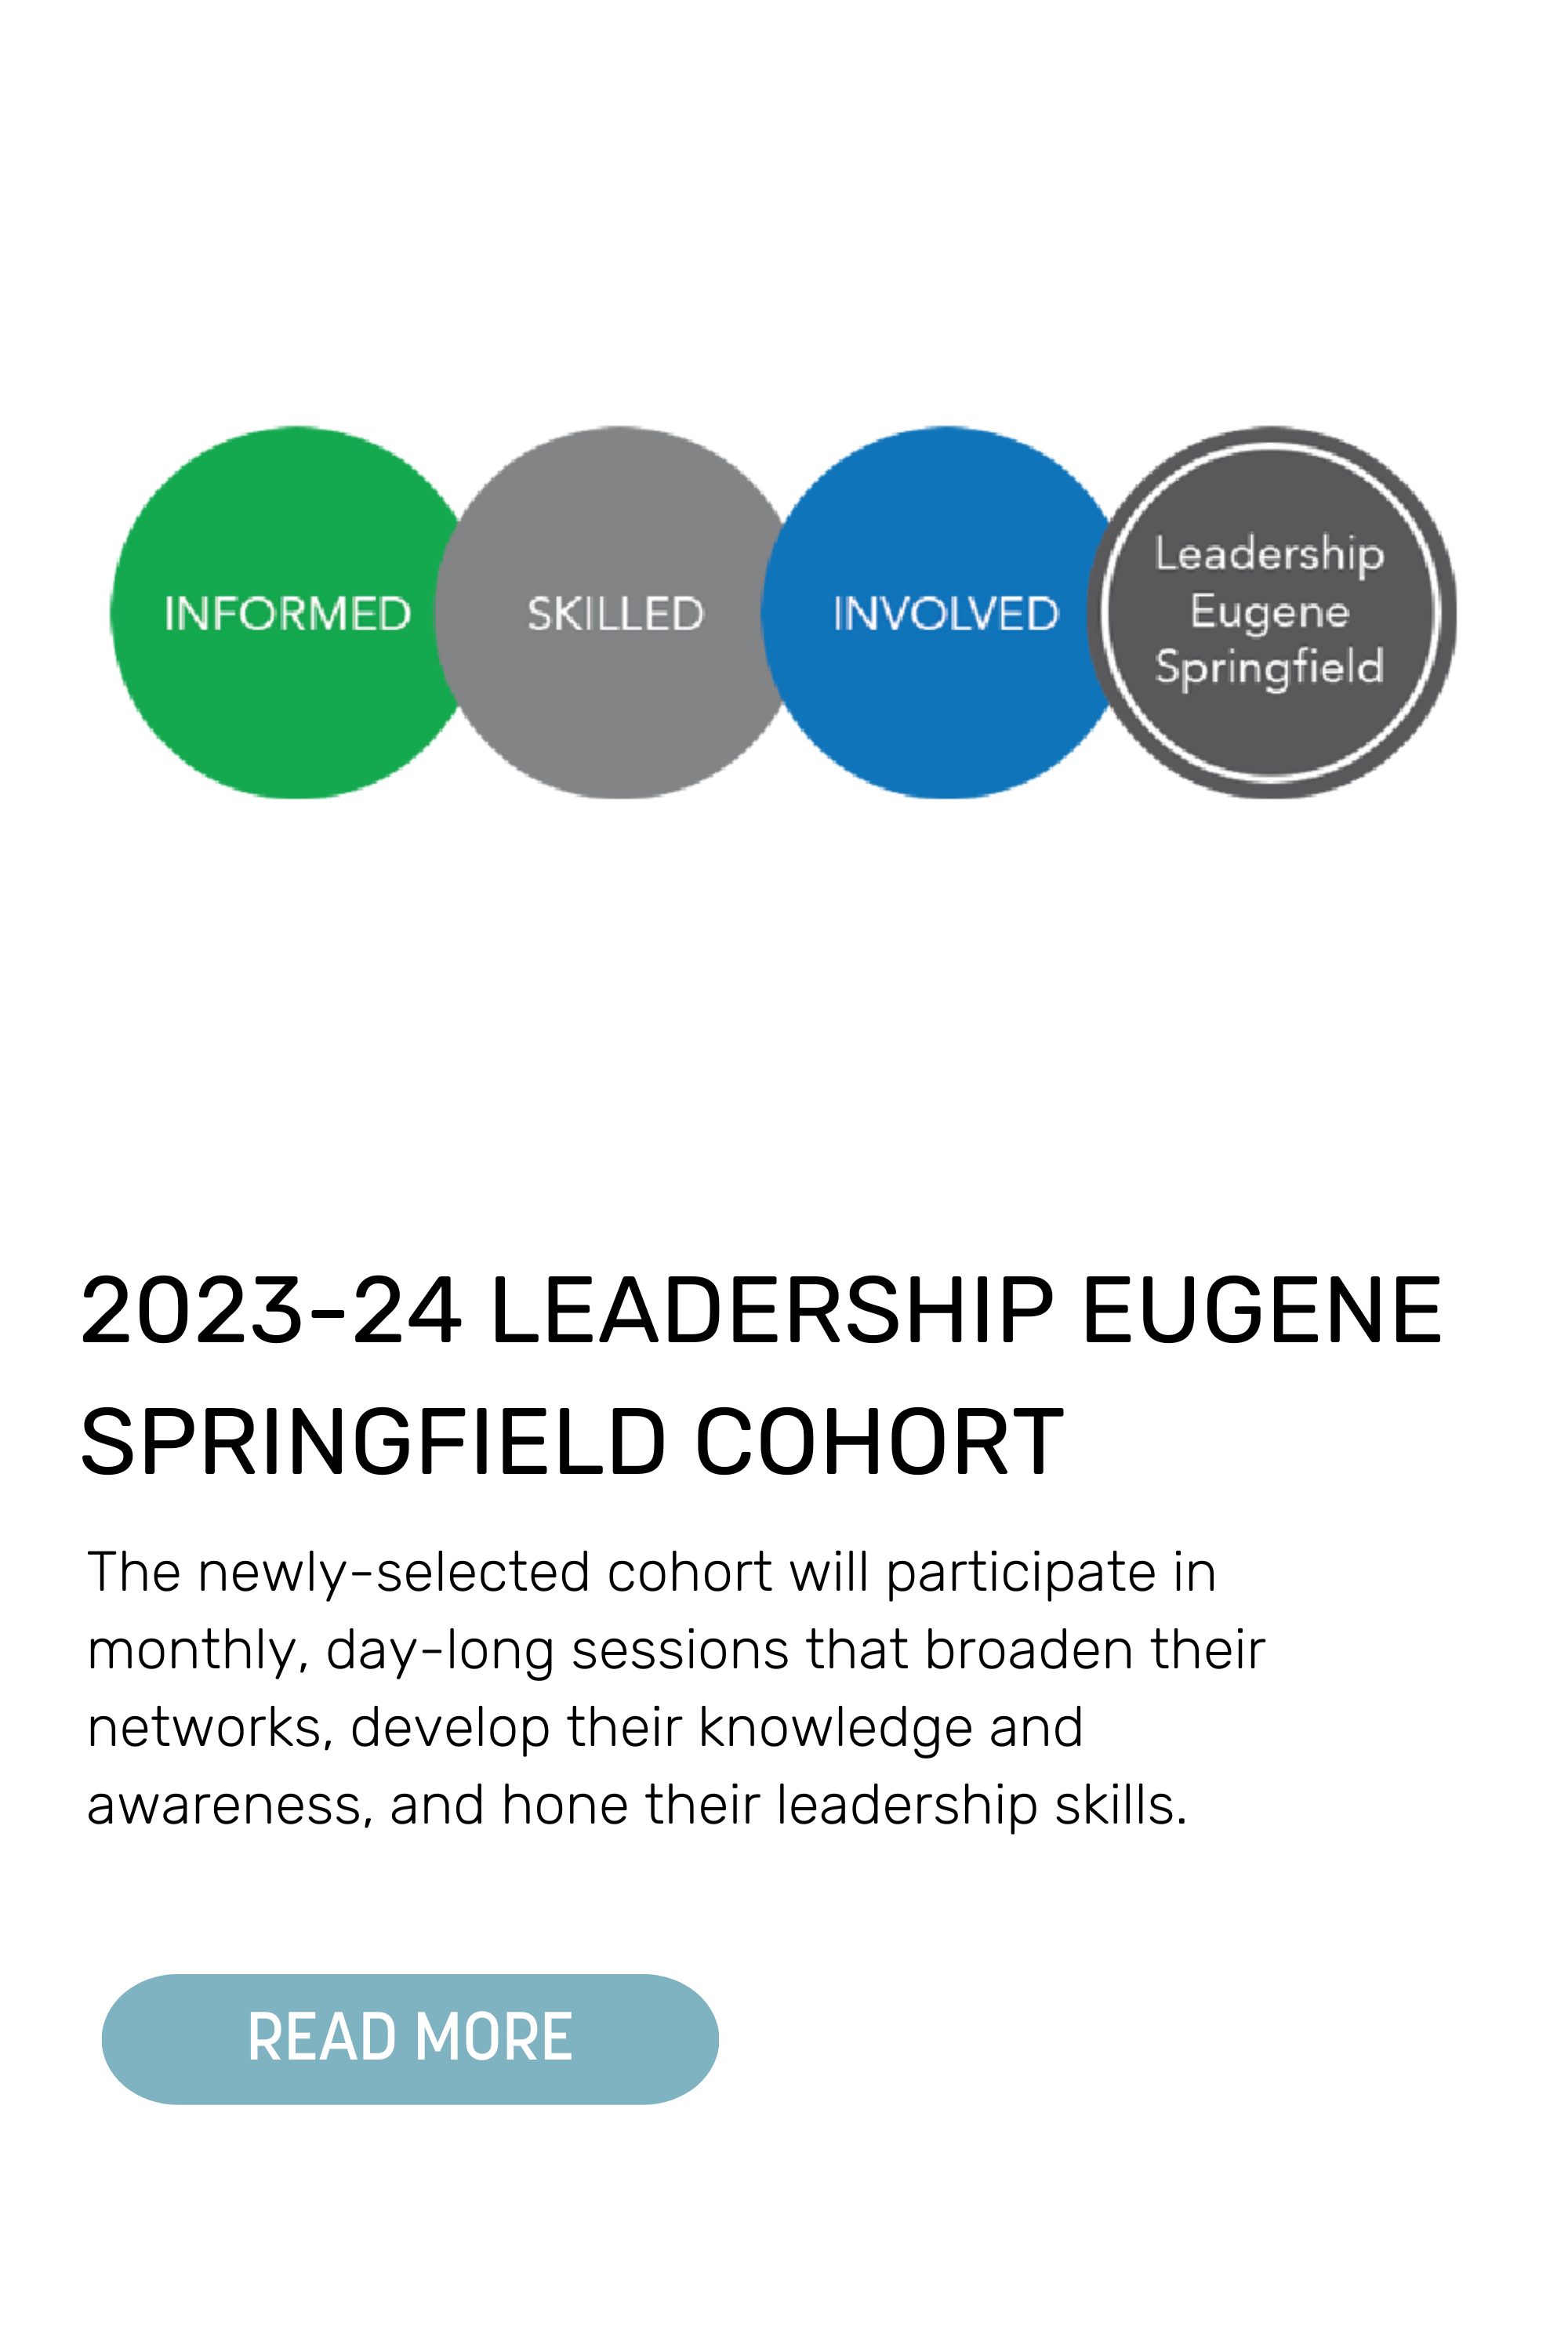 SPRINGFIELD CHAMBER ANNOUNCES 2023-24 LEADERSHIP EUGENE SPRINGFIELD COHORT